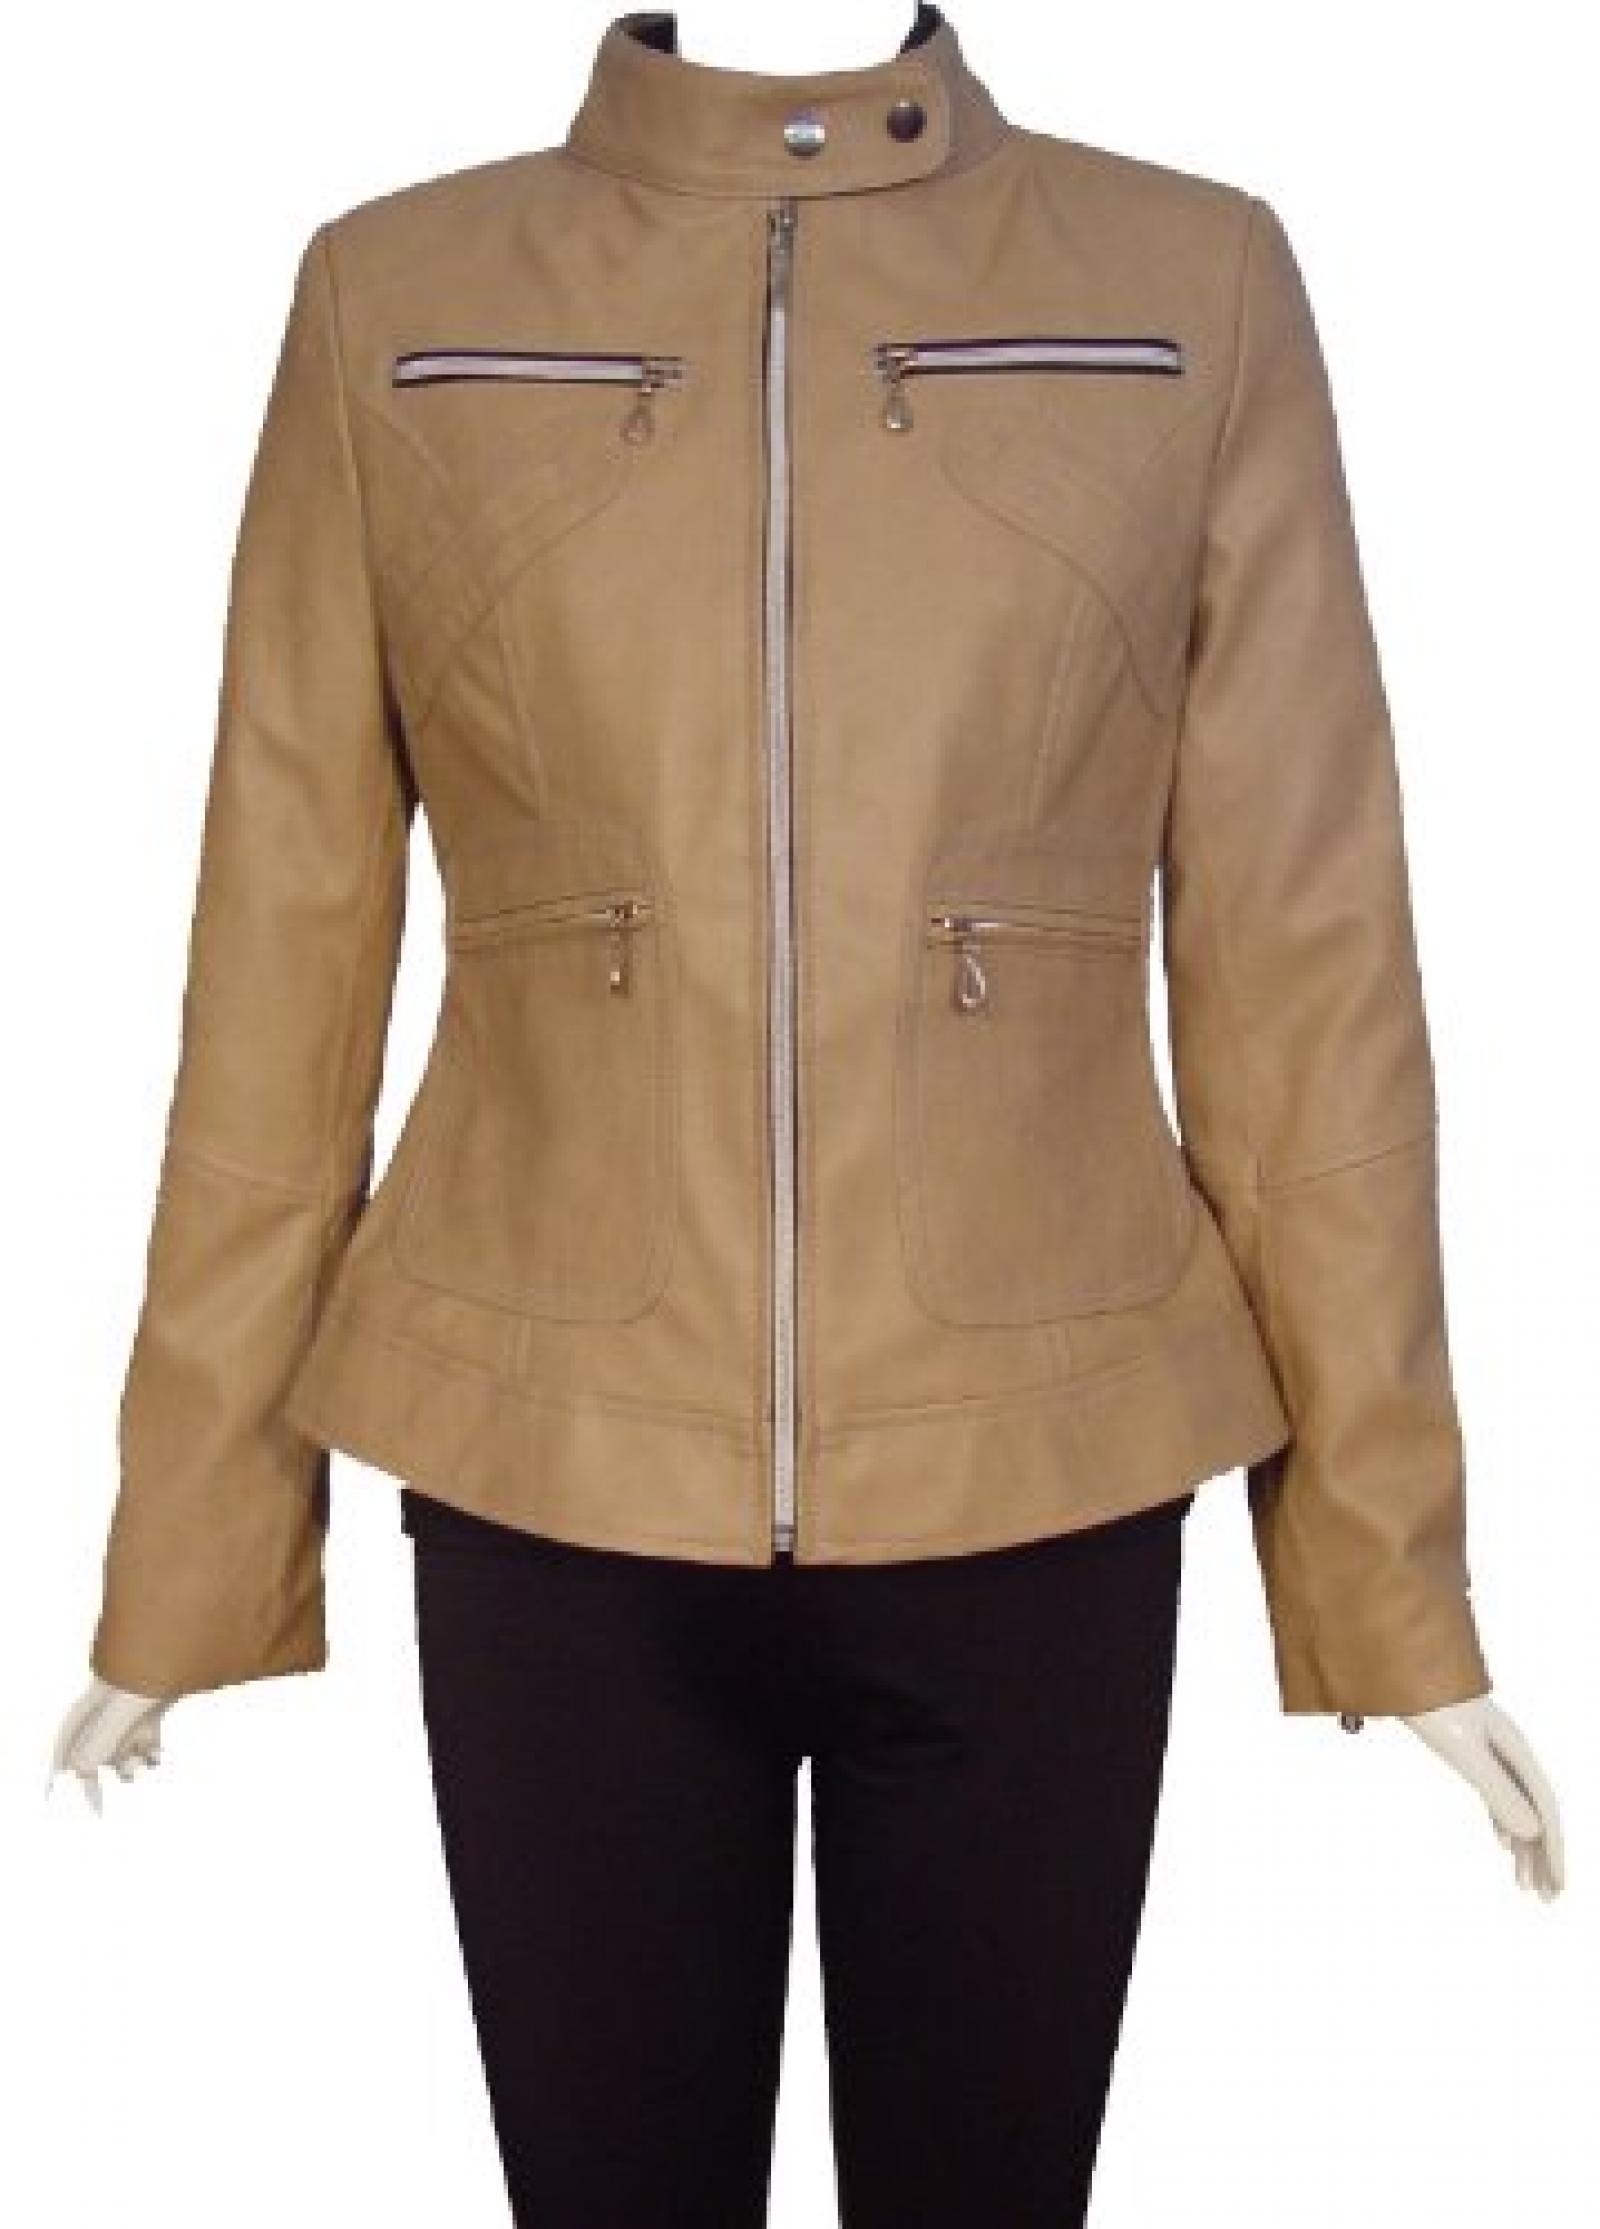 Nettailor Women PLUS SIZE 4073 Lamb Leather Motorcycle Jacket 